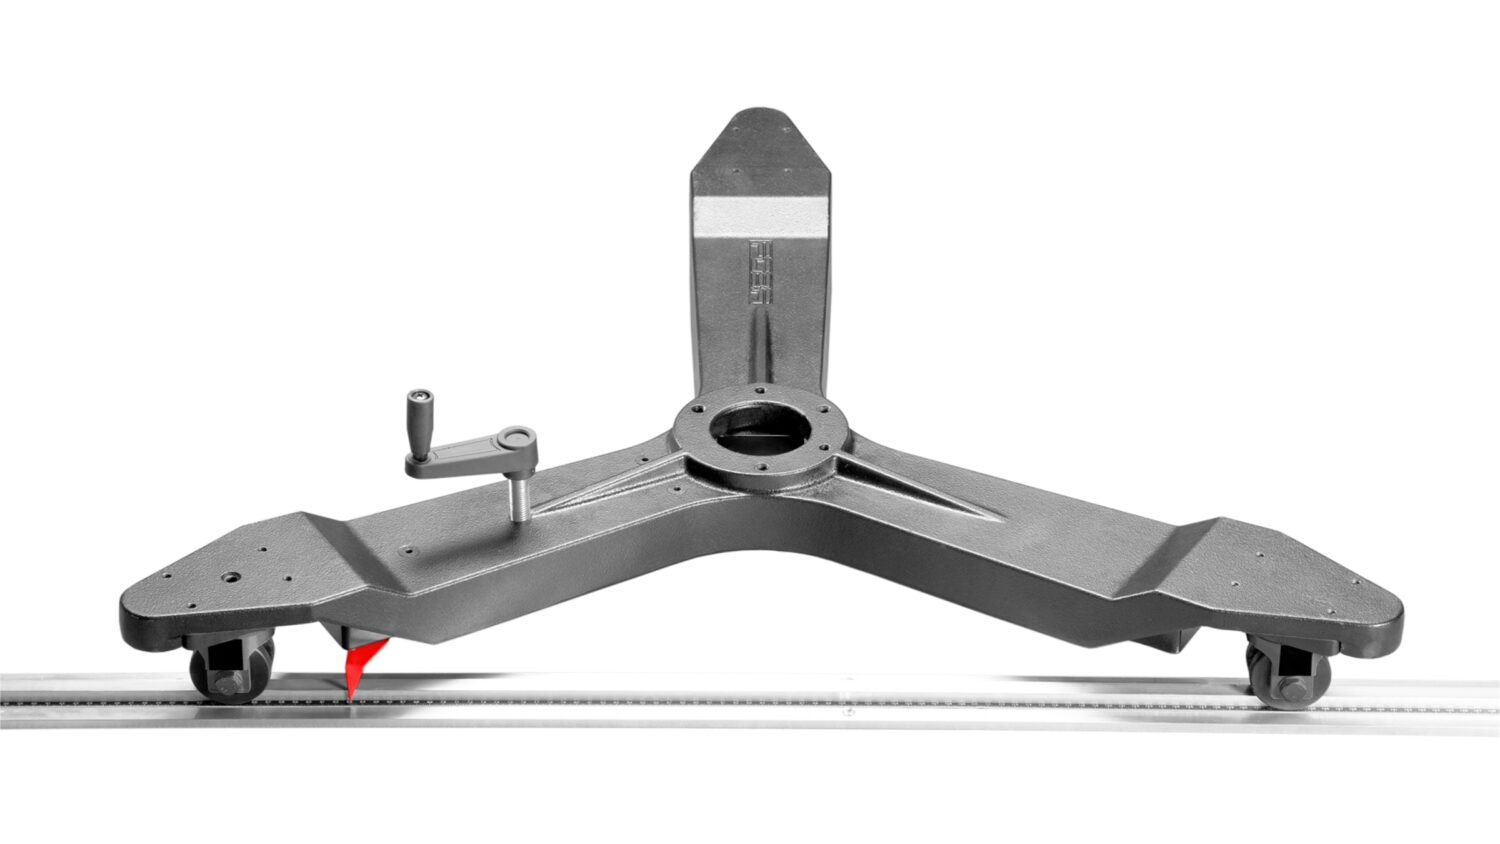 FOBA milimetre scale for floor rail for a studio stand (Messtechnik, Halterung, Positionierung)